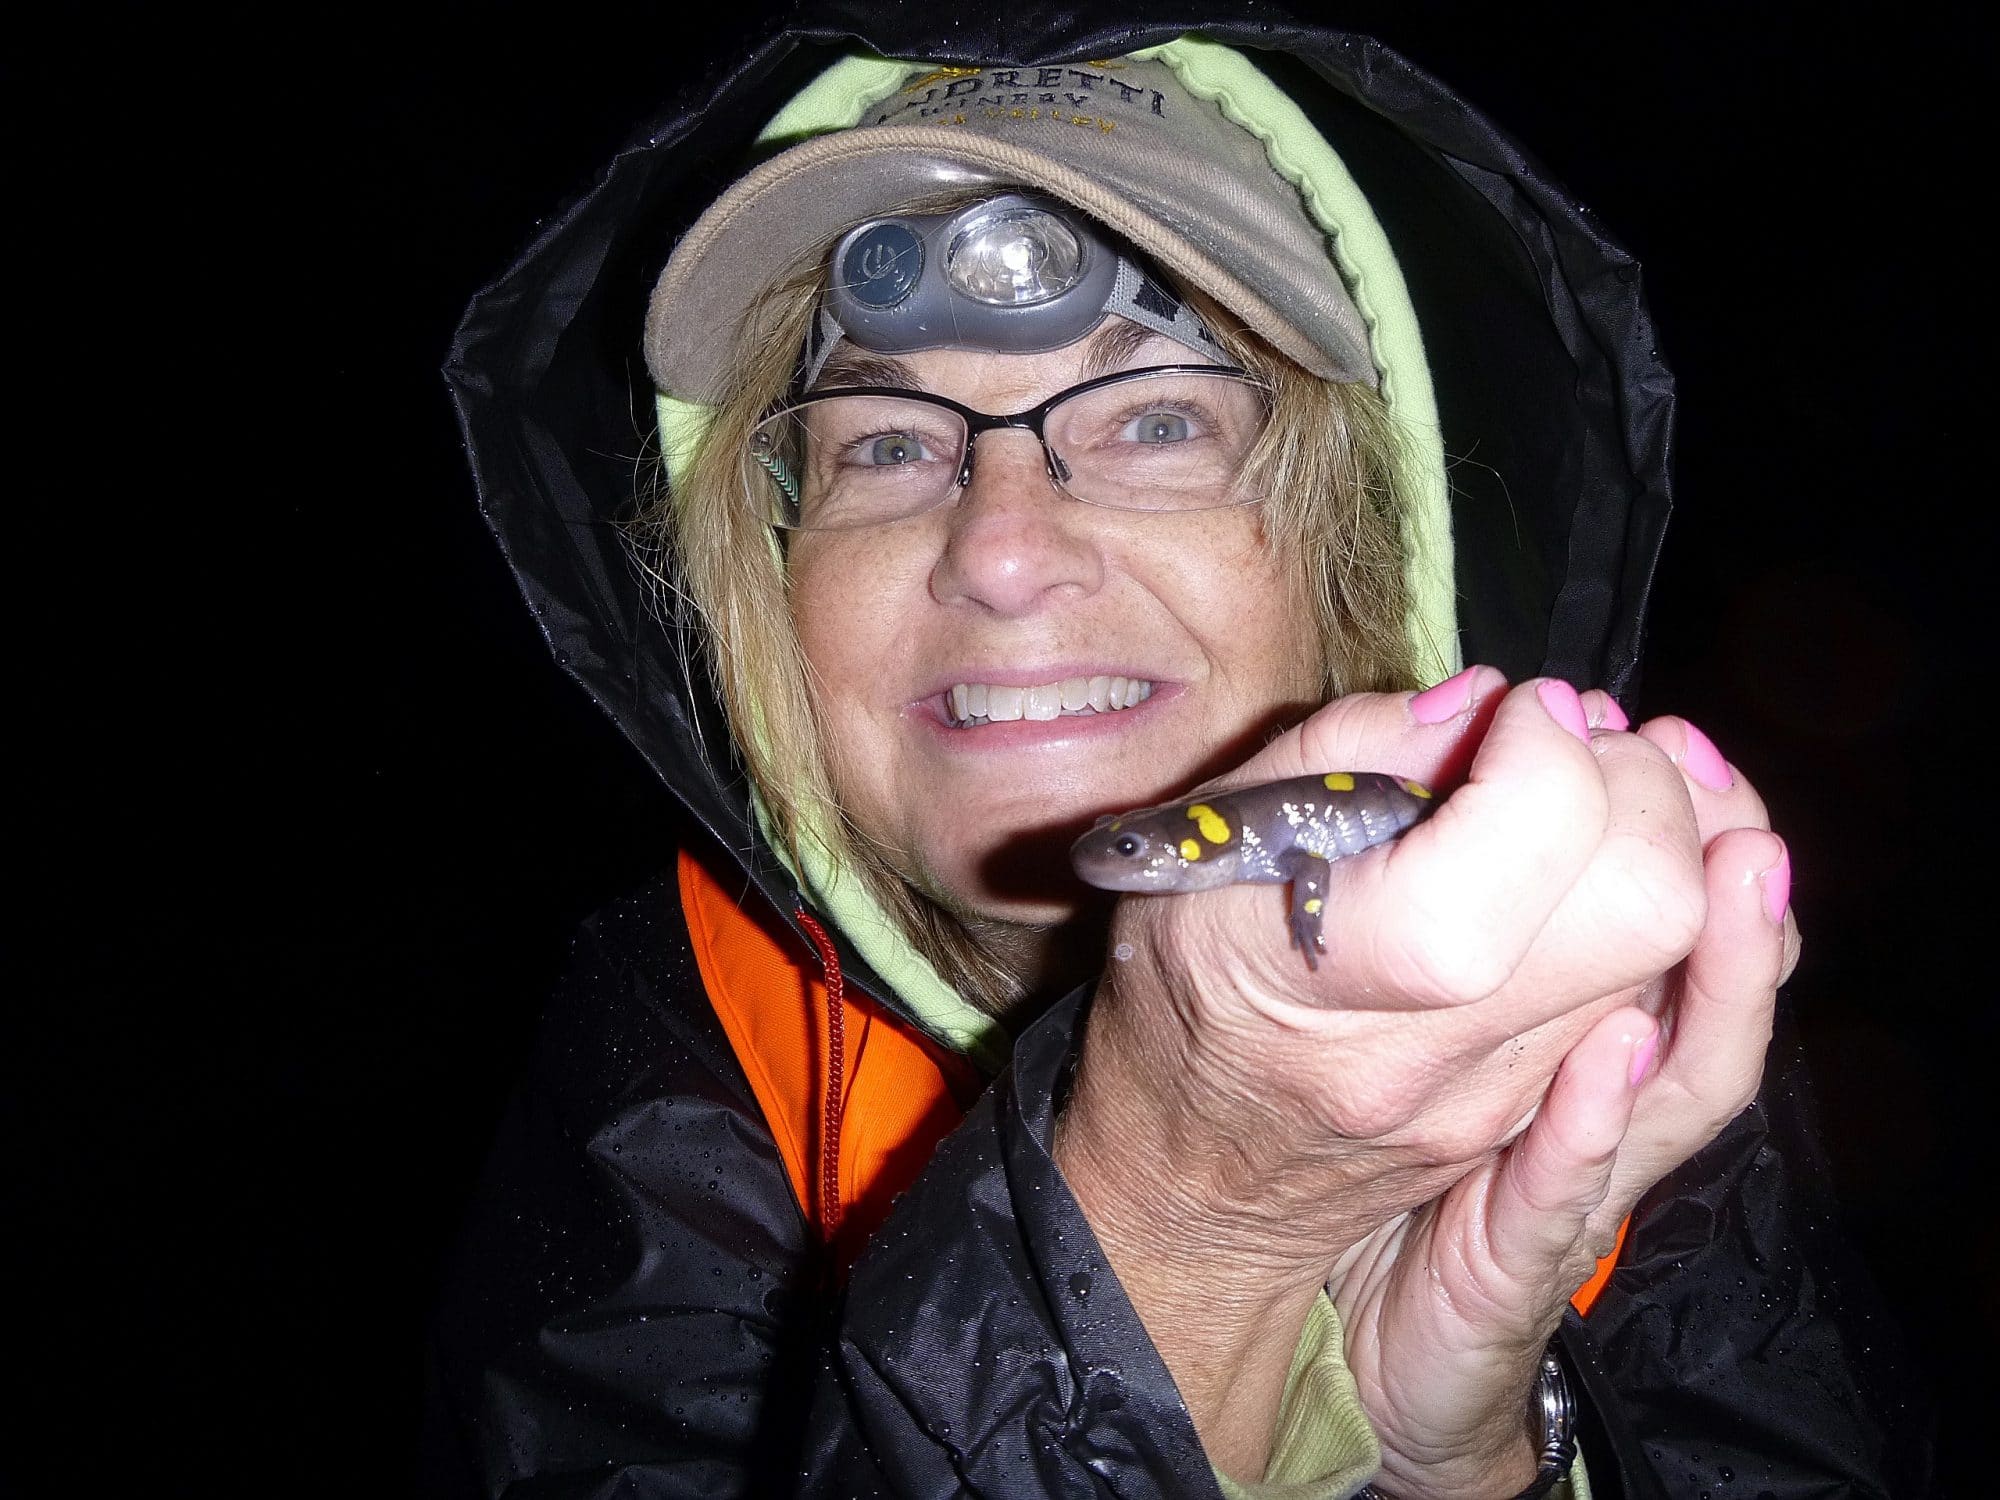 A Salamander Crossing Brigade volunteer enjoys Big Night. (photo © Cheryl Martin)